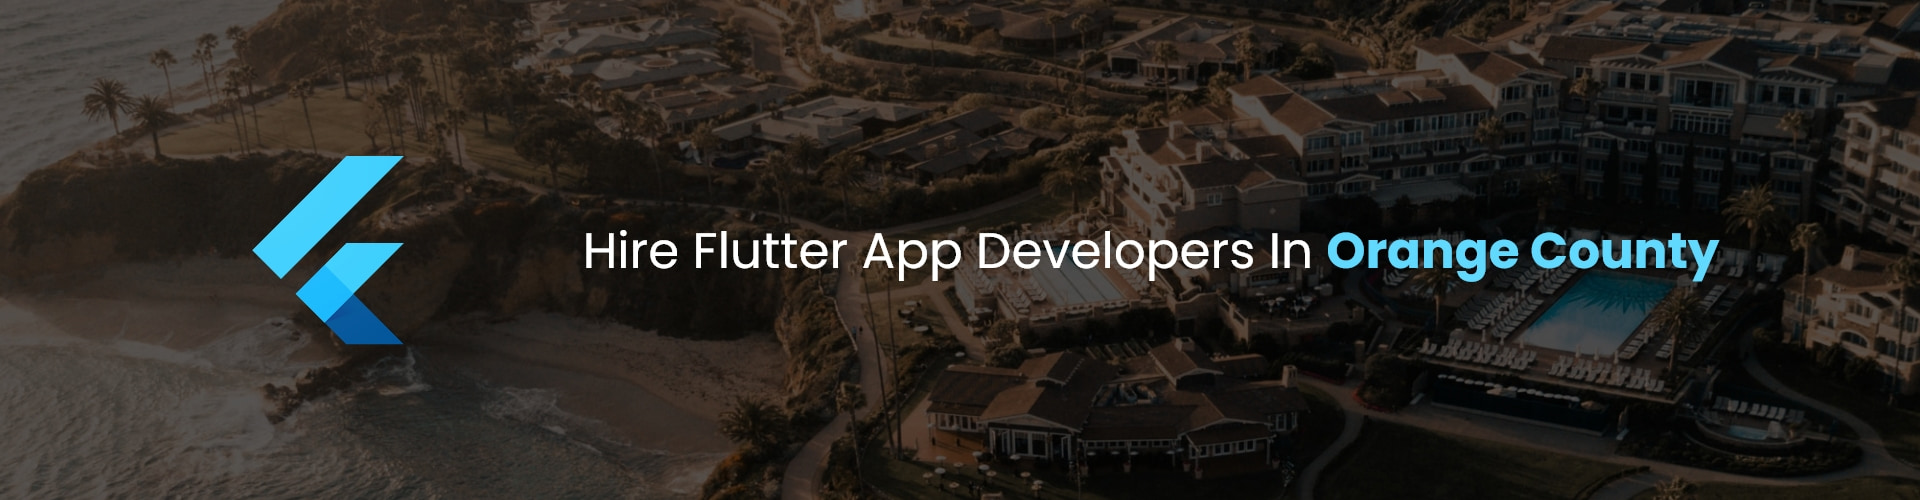 hire flutter app developers in orange county